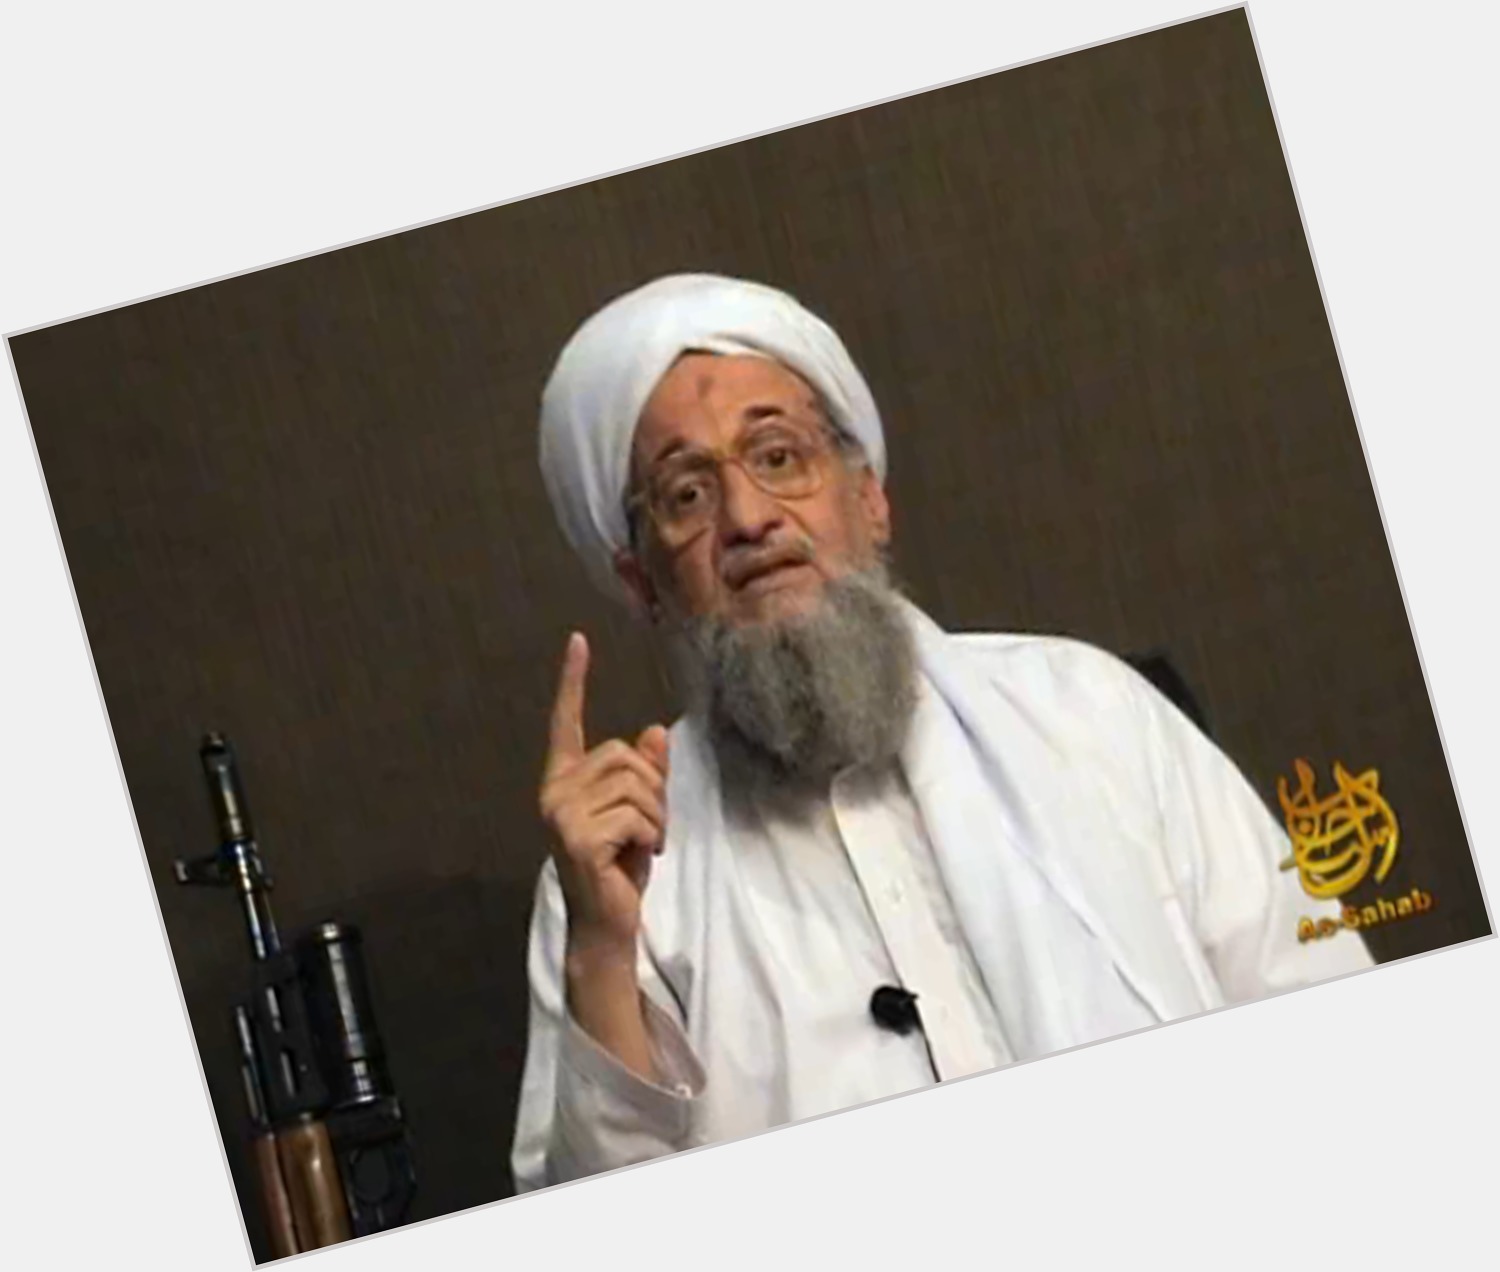 Ayman al Zawahiri dating 2